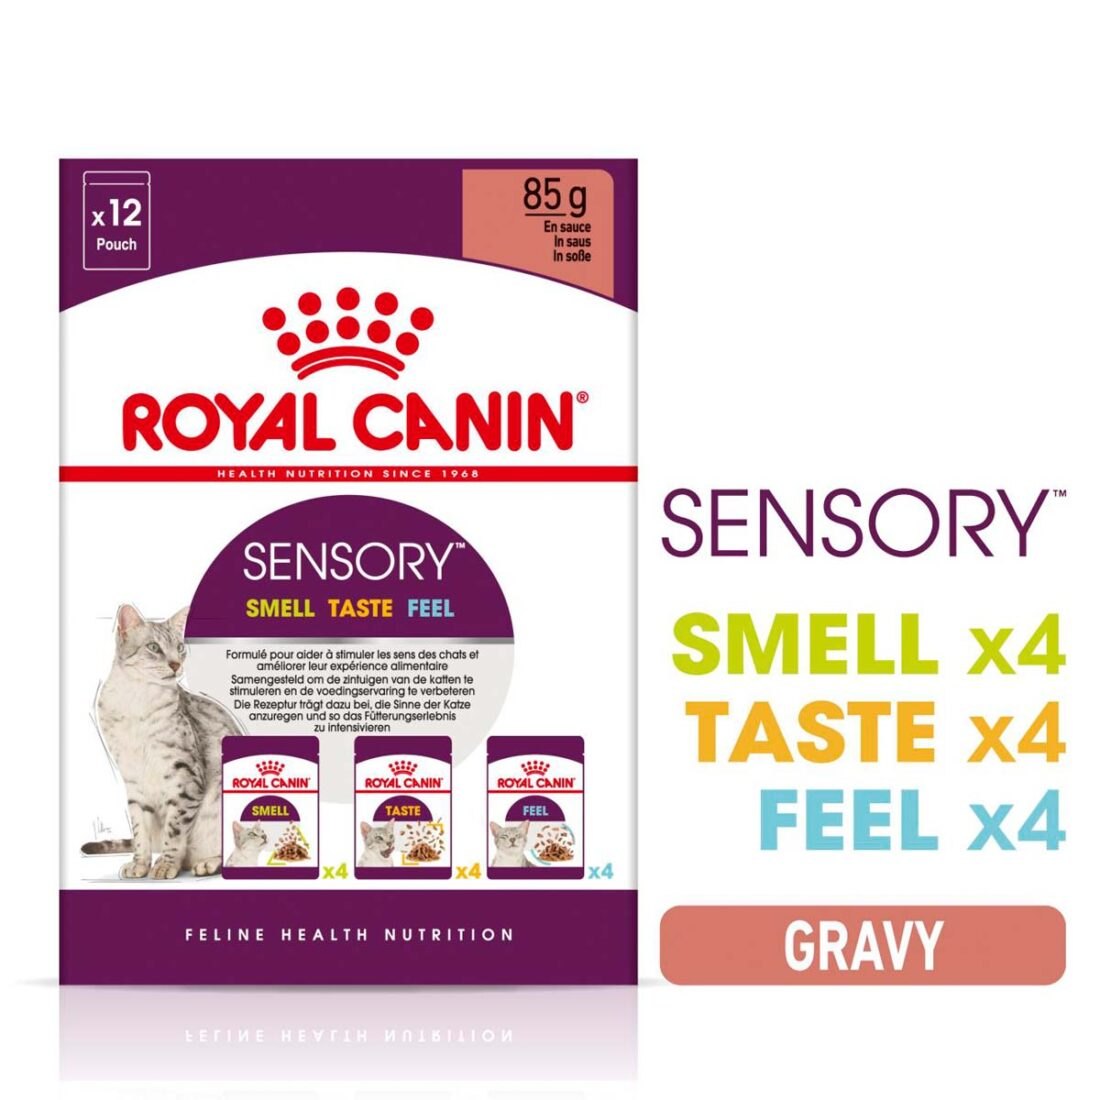 Royal Canin Sensory Multipack Gravy 12